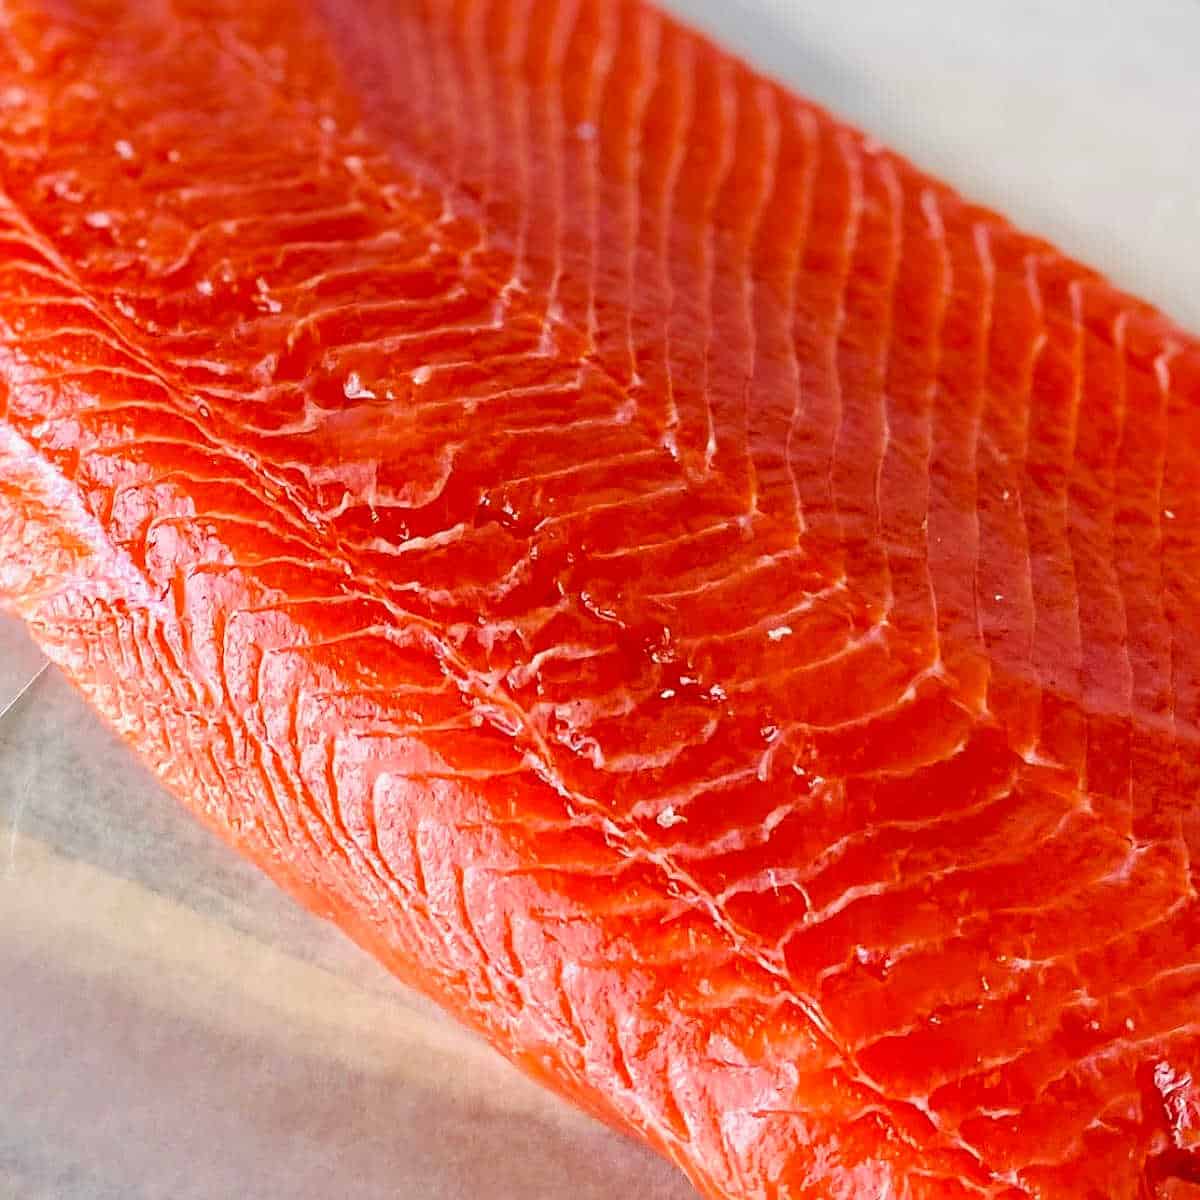 sockeye salmon filet.